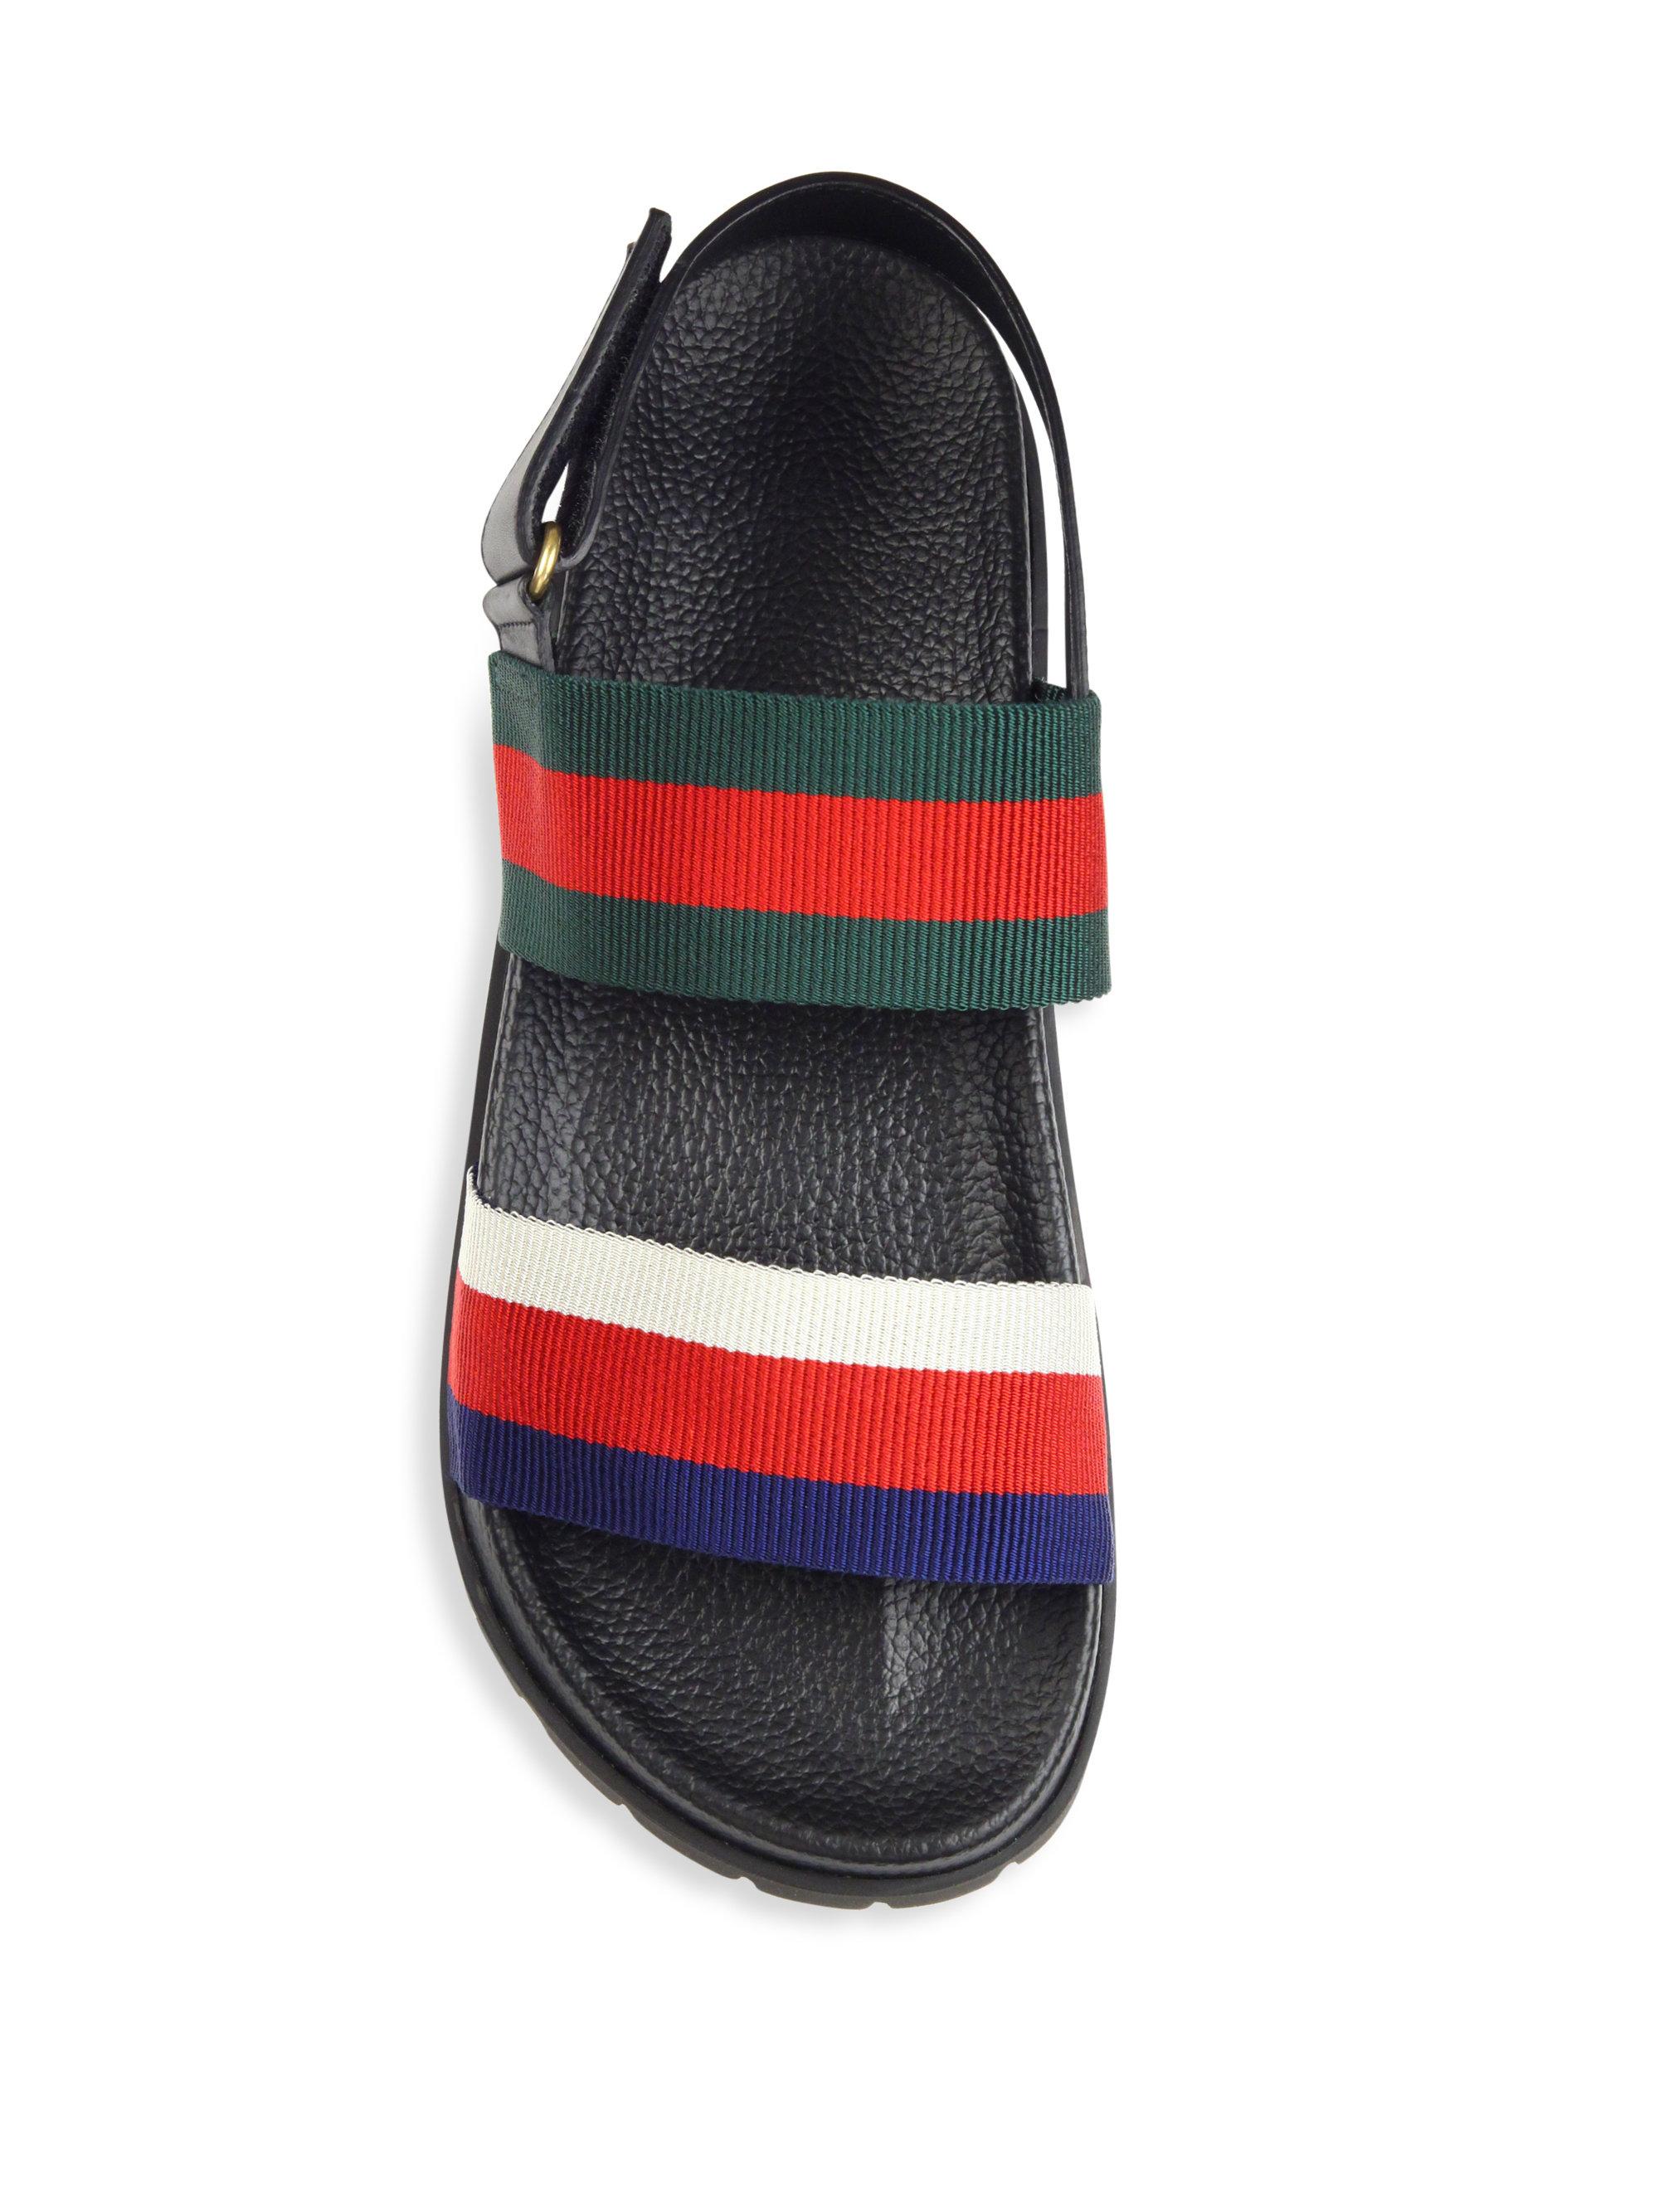 Gucci Rimini Leather Double Strap Sandals | Lyst